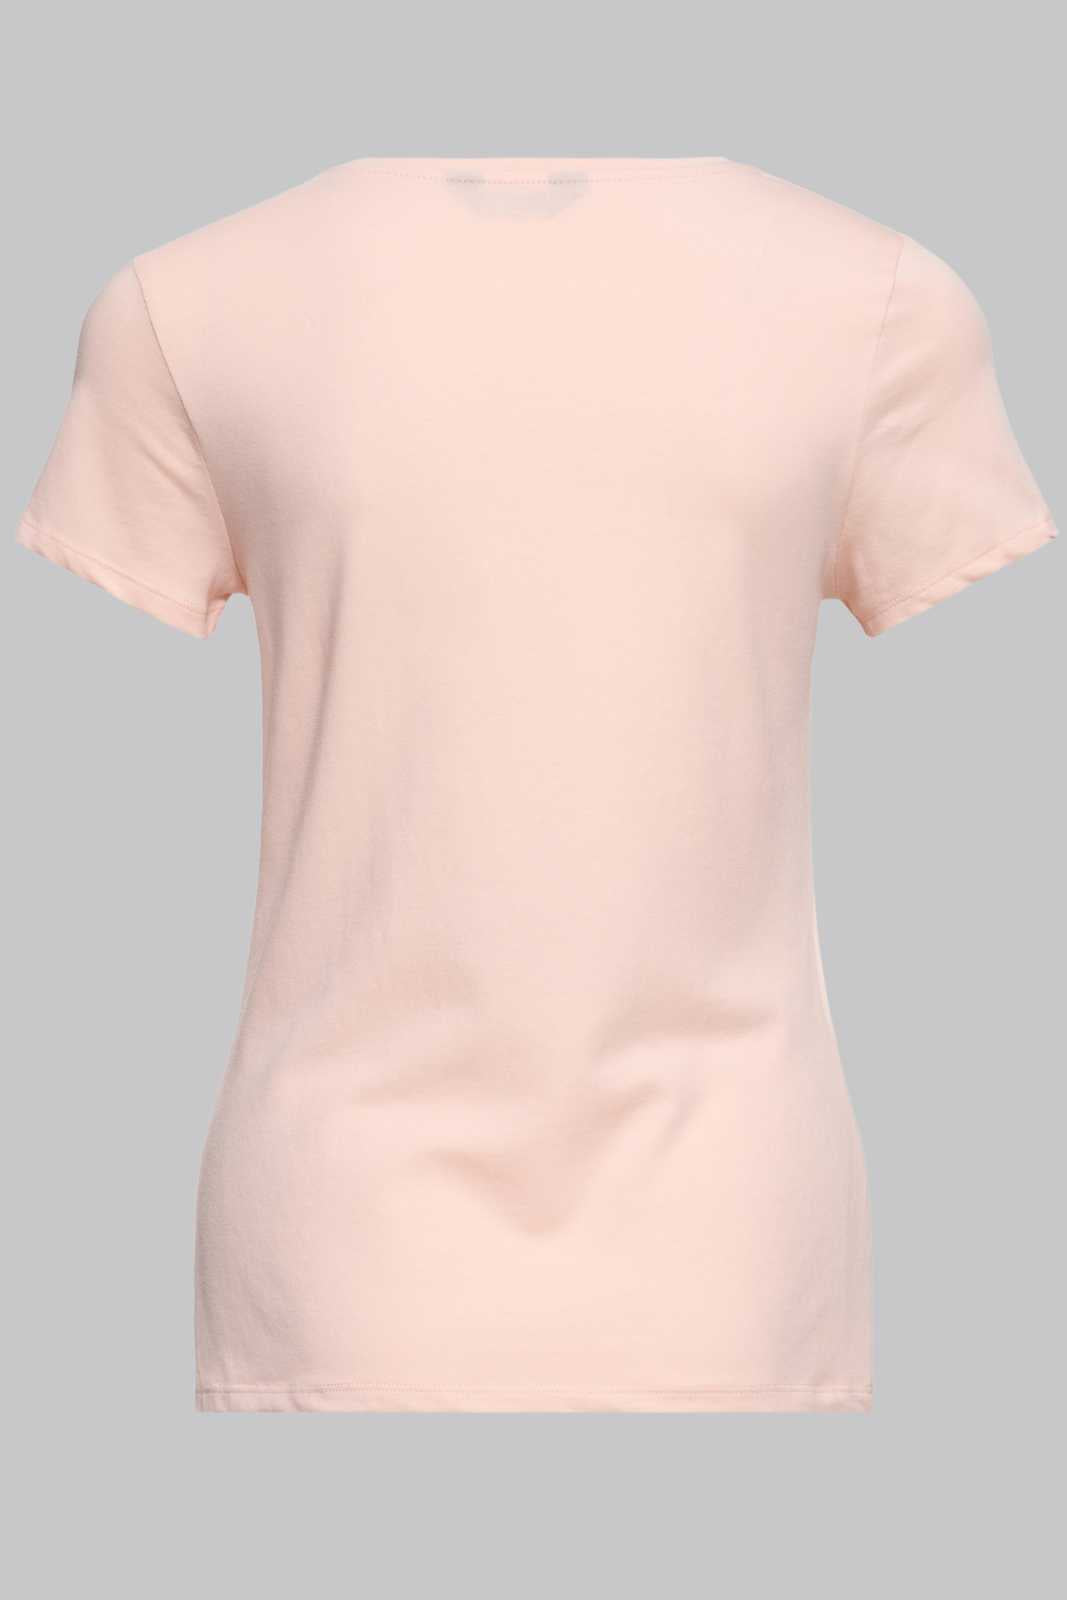 Head Hunter T-Shirt Pink